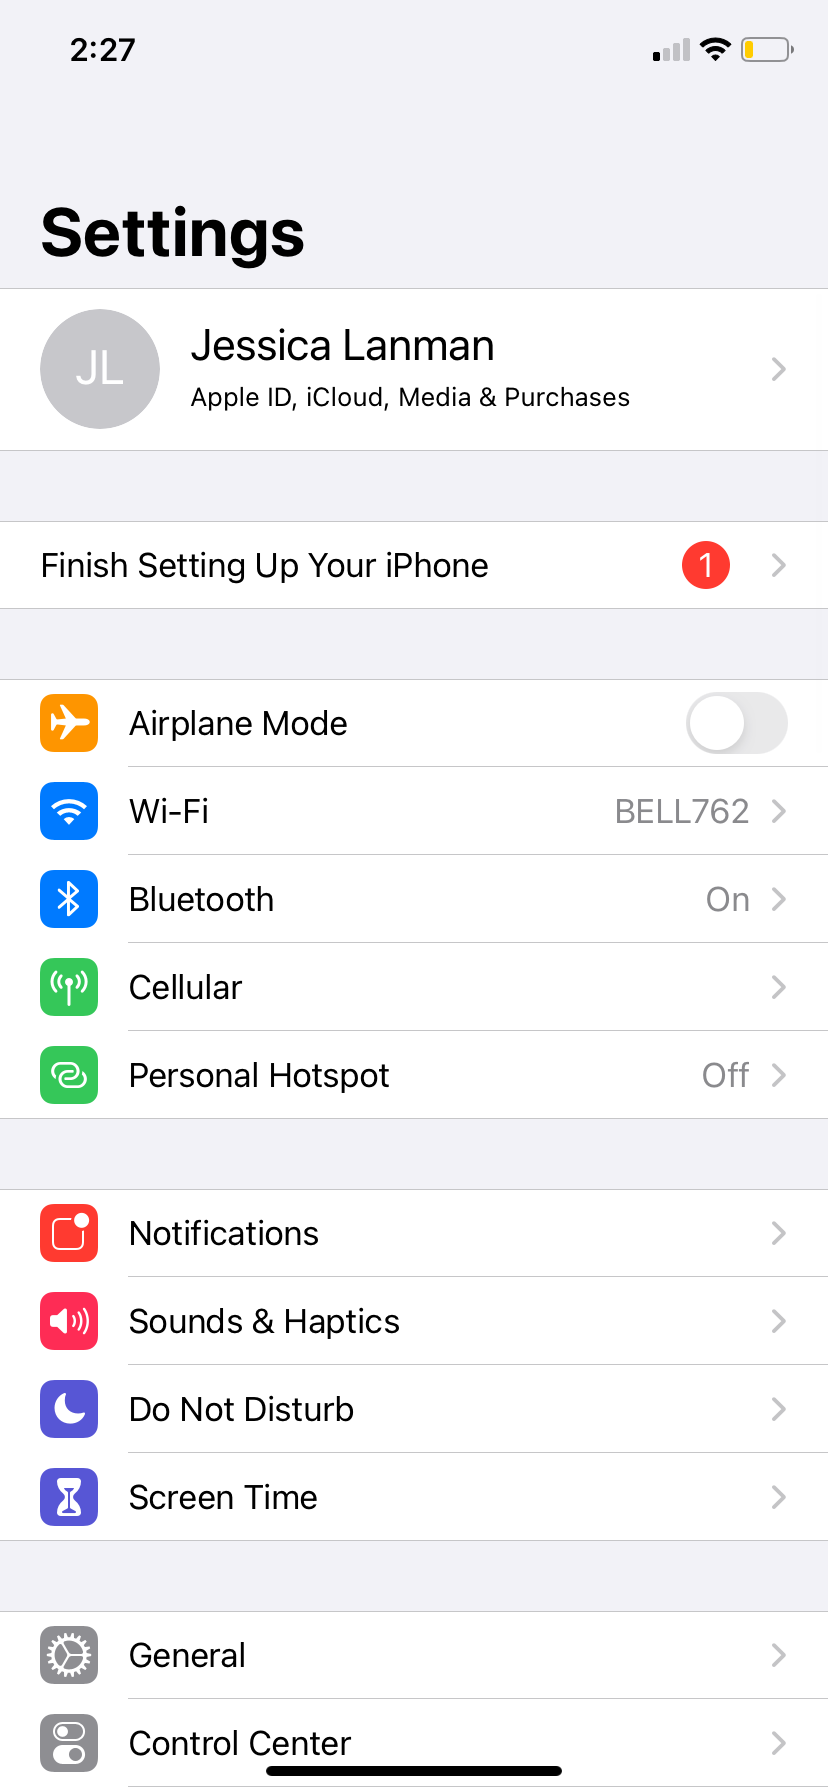 The main settings window on an iPhone XR